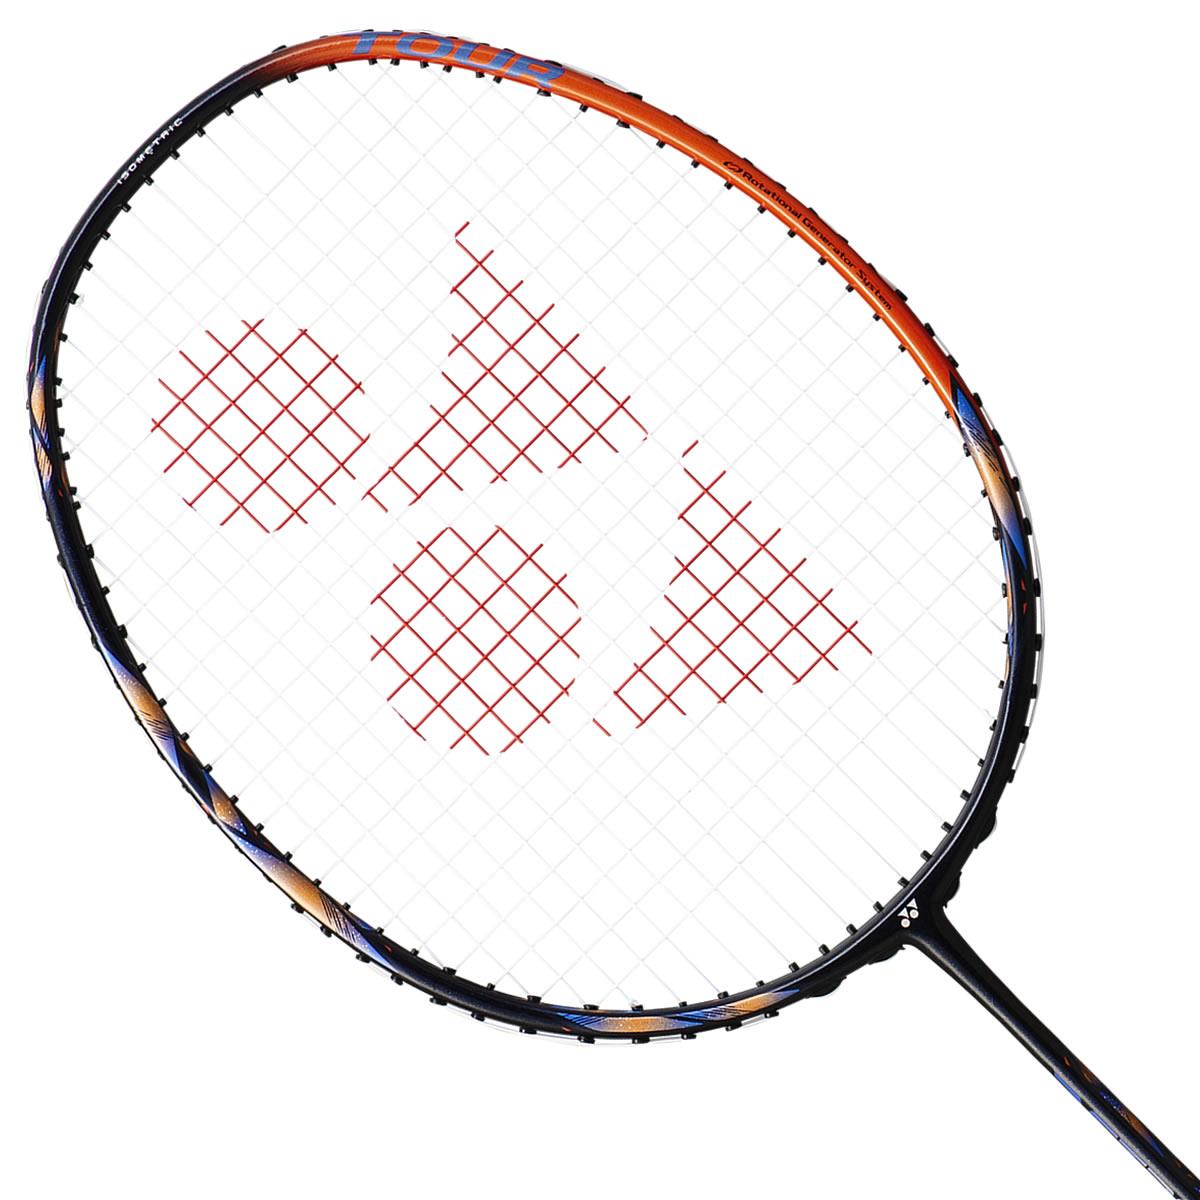 Yonex Astrox 77 Pro 4U Badminton Racket - High Orange